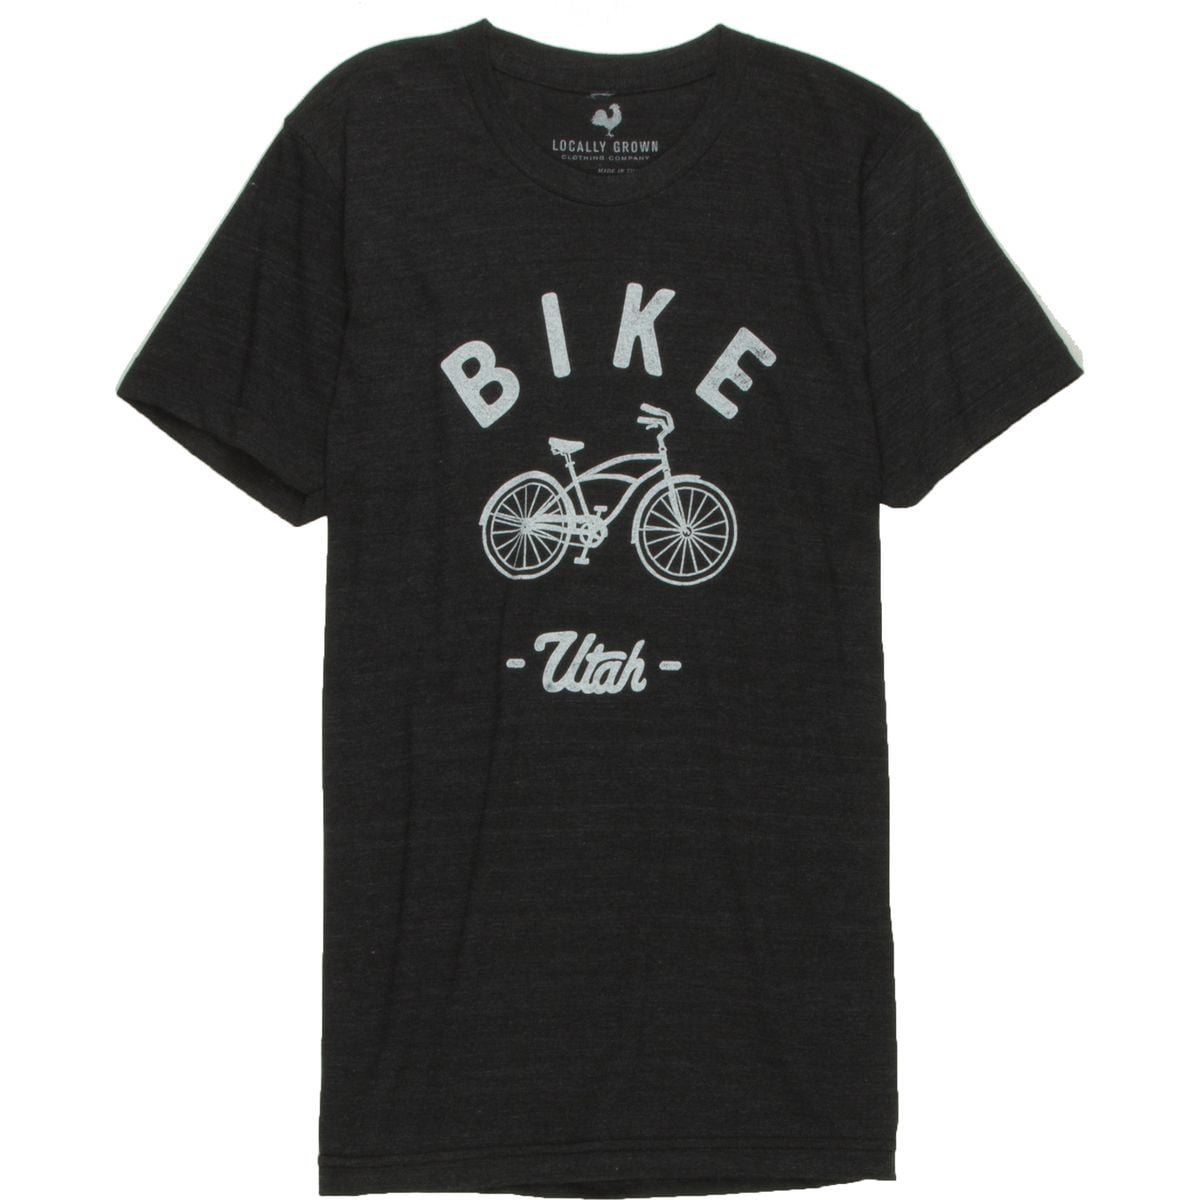 Locally Grown Bike Cruiser Utah Tri-Blend Vintage T-Shirt - Short-Sleeve - Men's Vintage Black/White, L